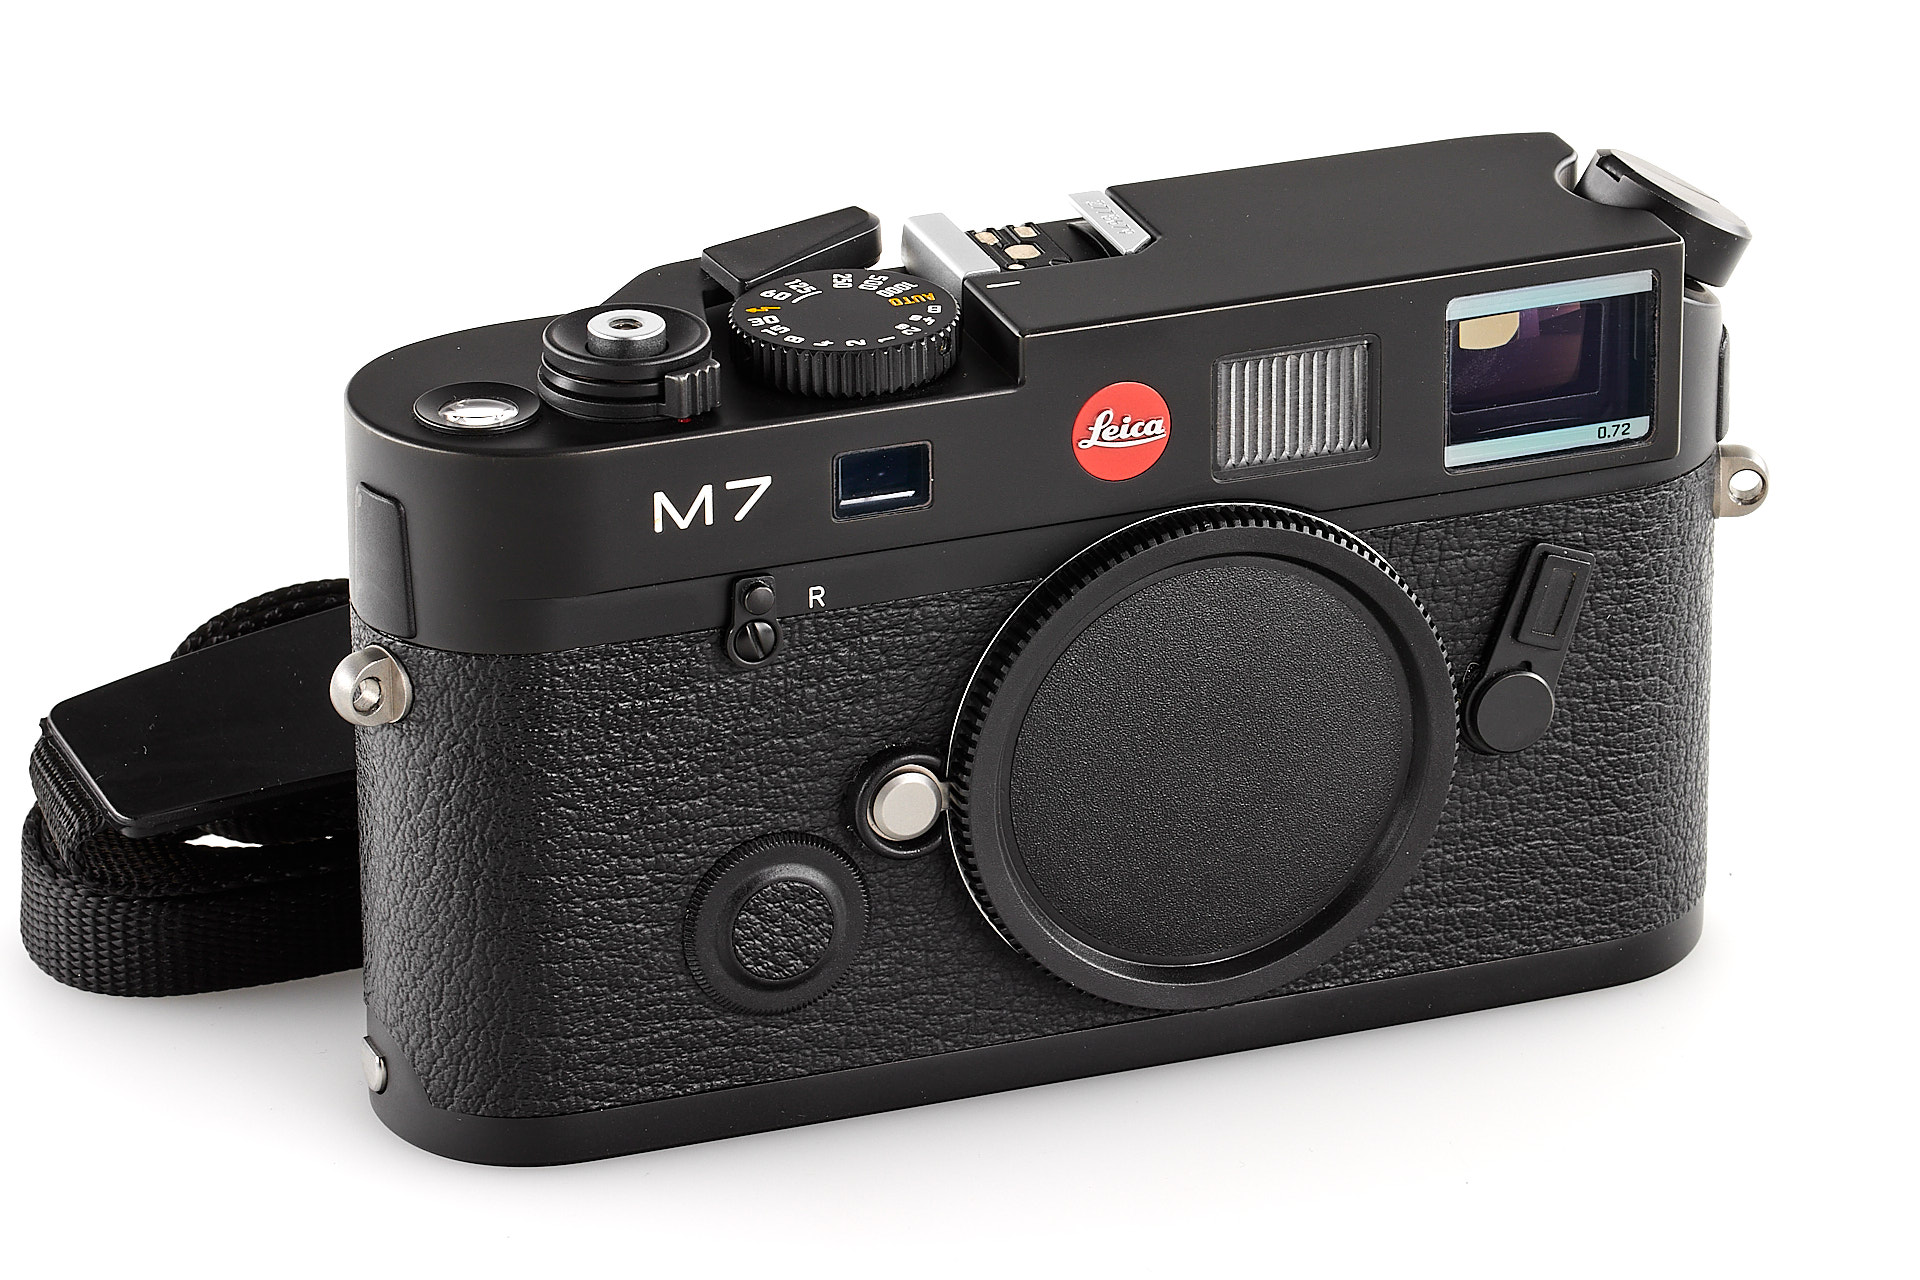 Leica M7 (0.72) Black